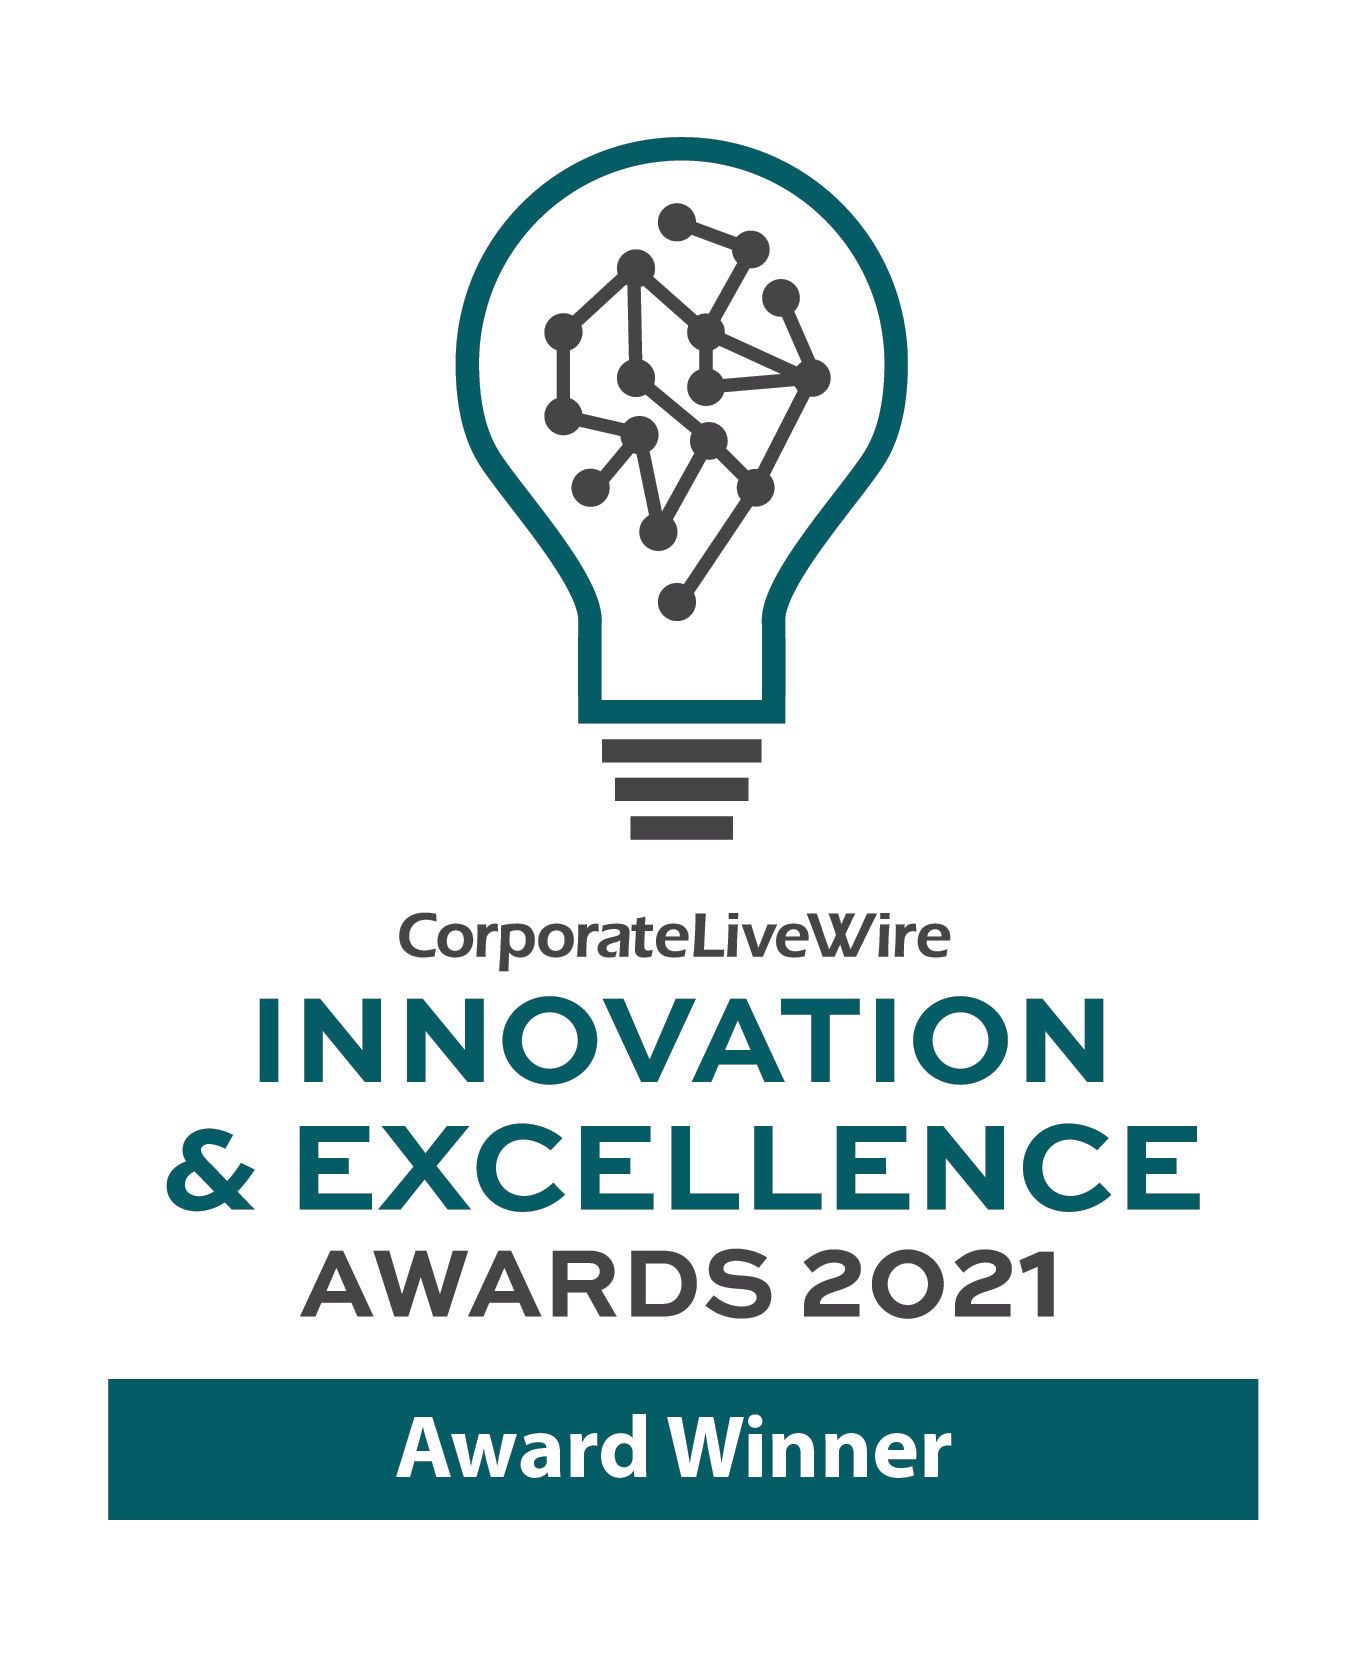 Winner of Innovation & Excellence Award 2021